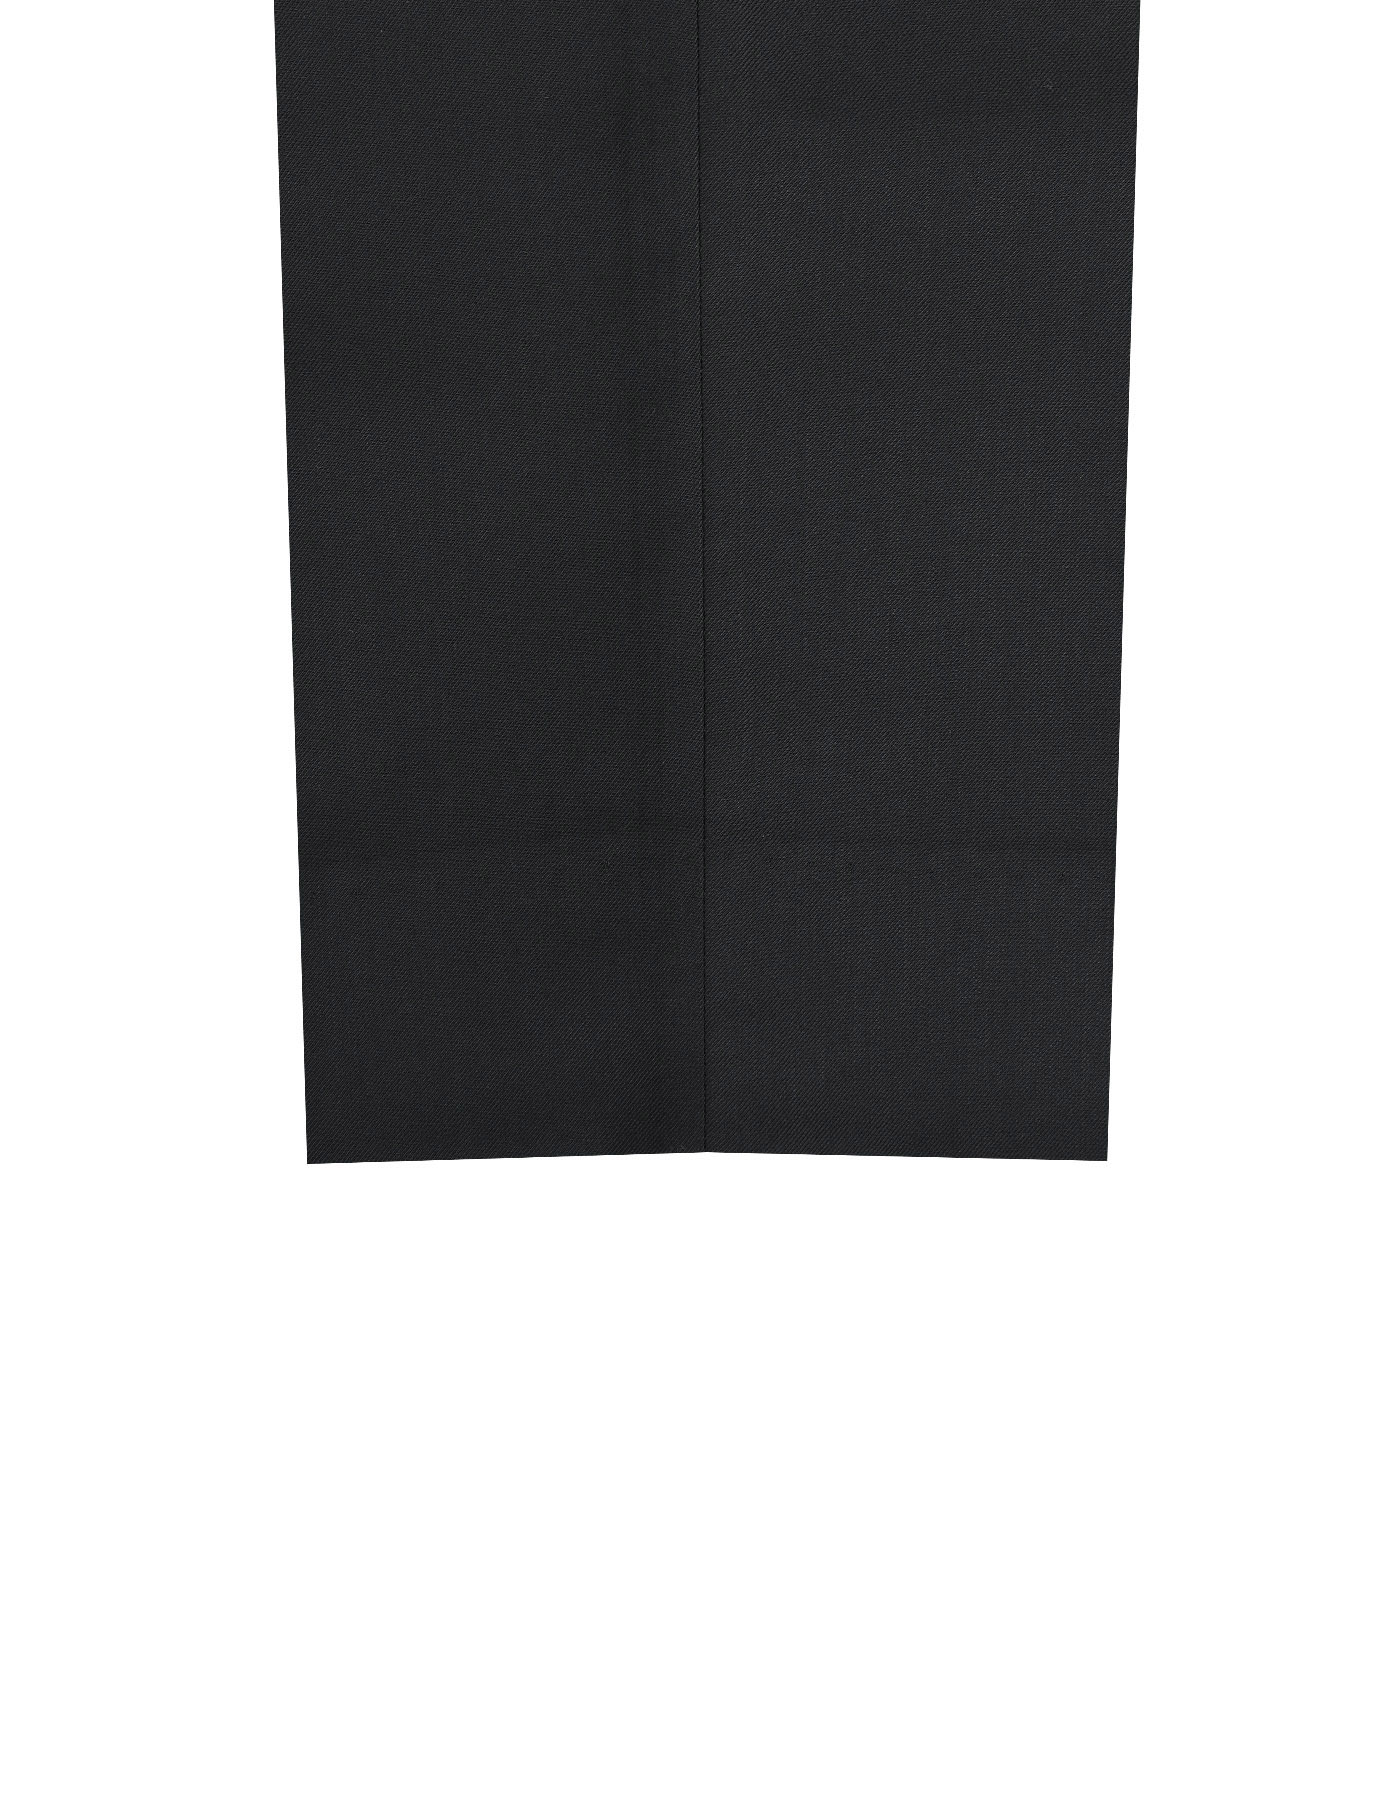 Formal Trouser Black 30 FT443C Uniworth TF443